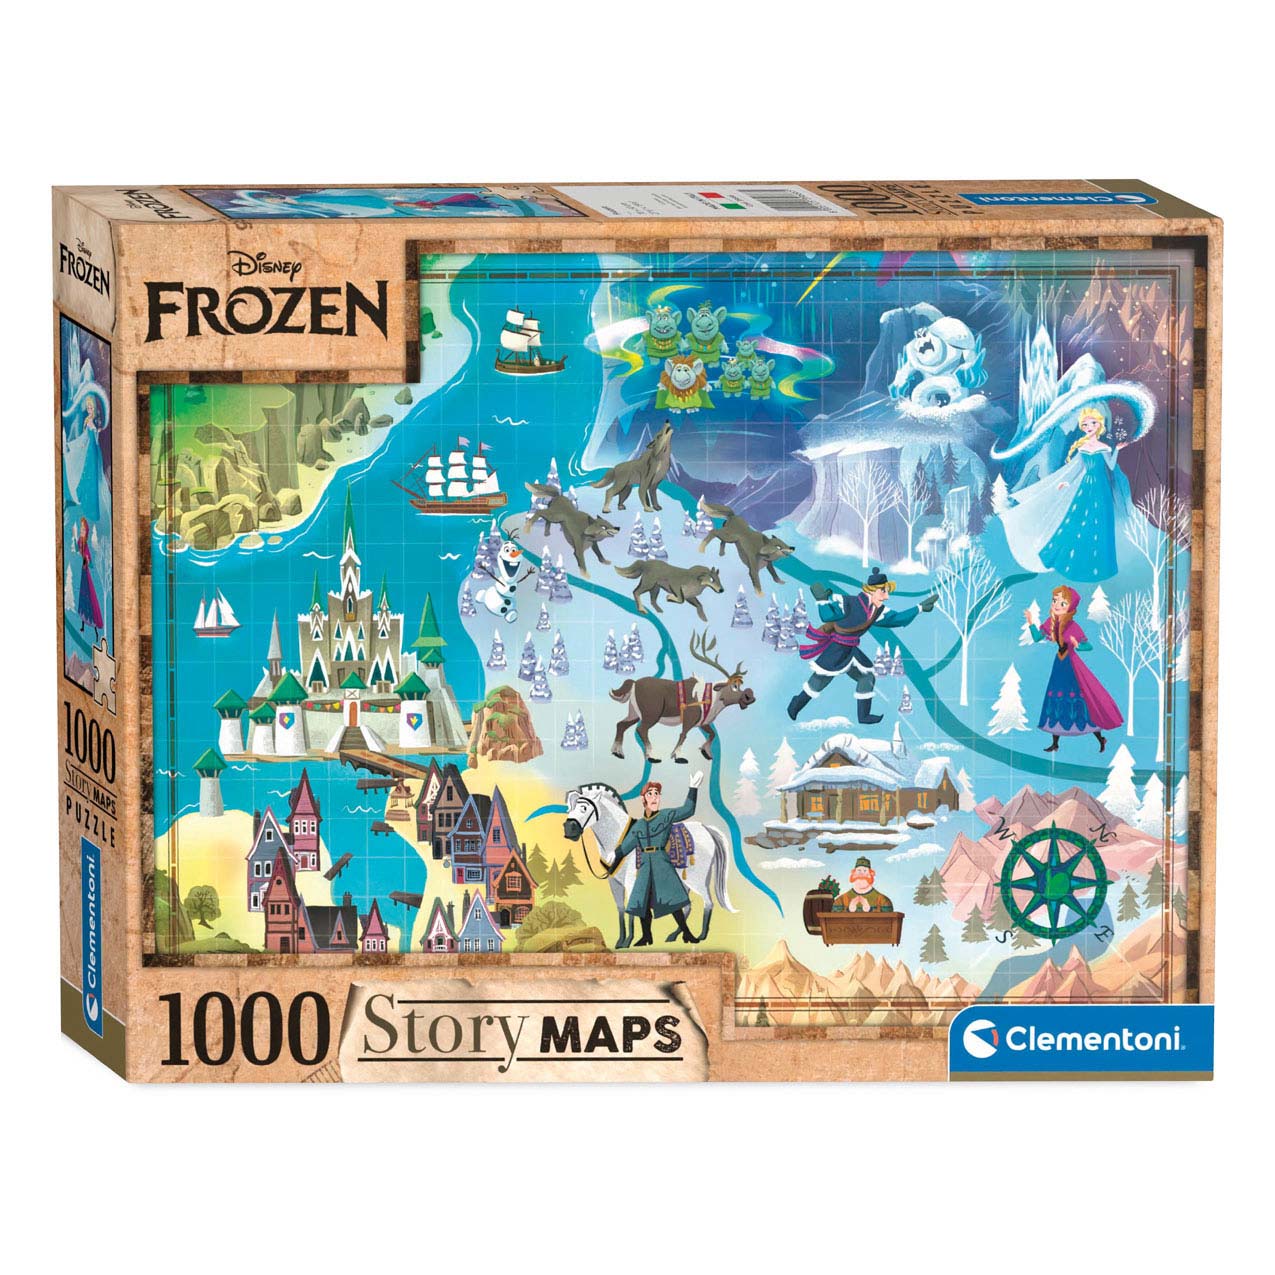 Frozen Jigsaw Puzzles